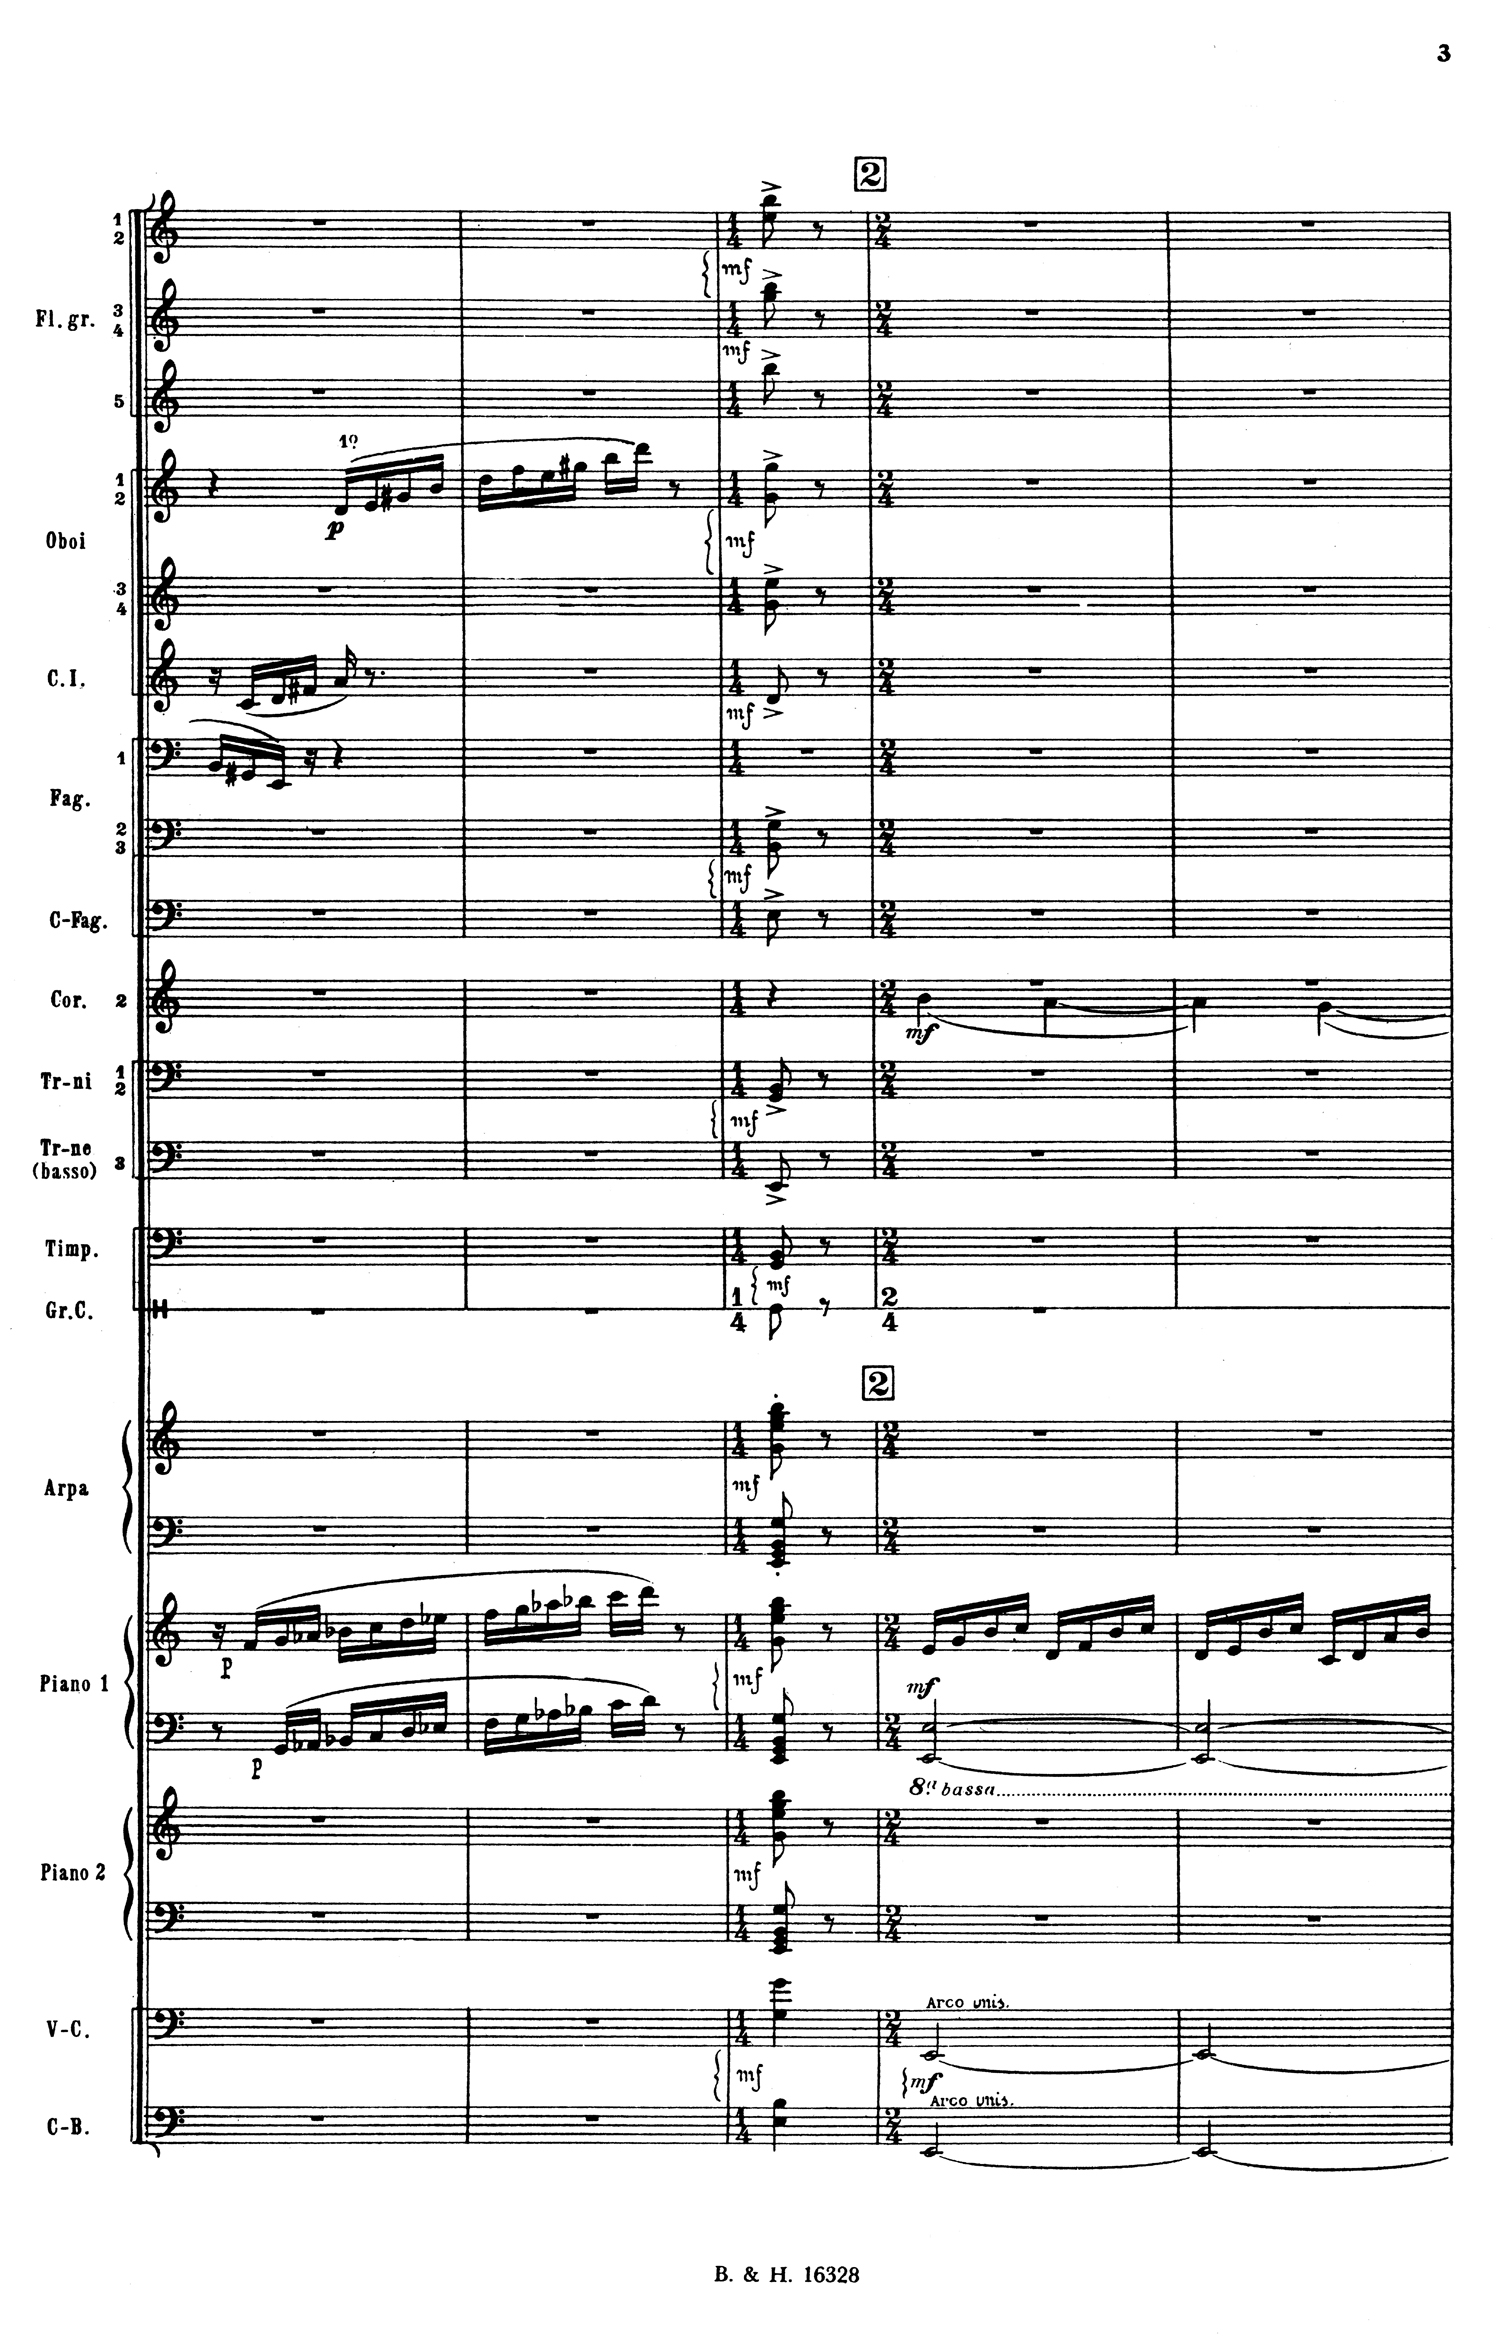 Stravinsky Psalms Score 3.jpg